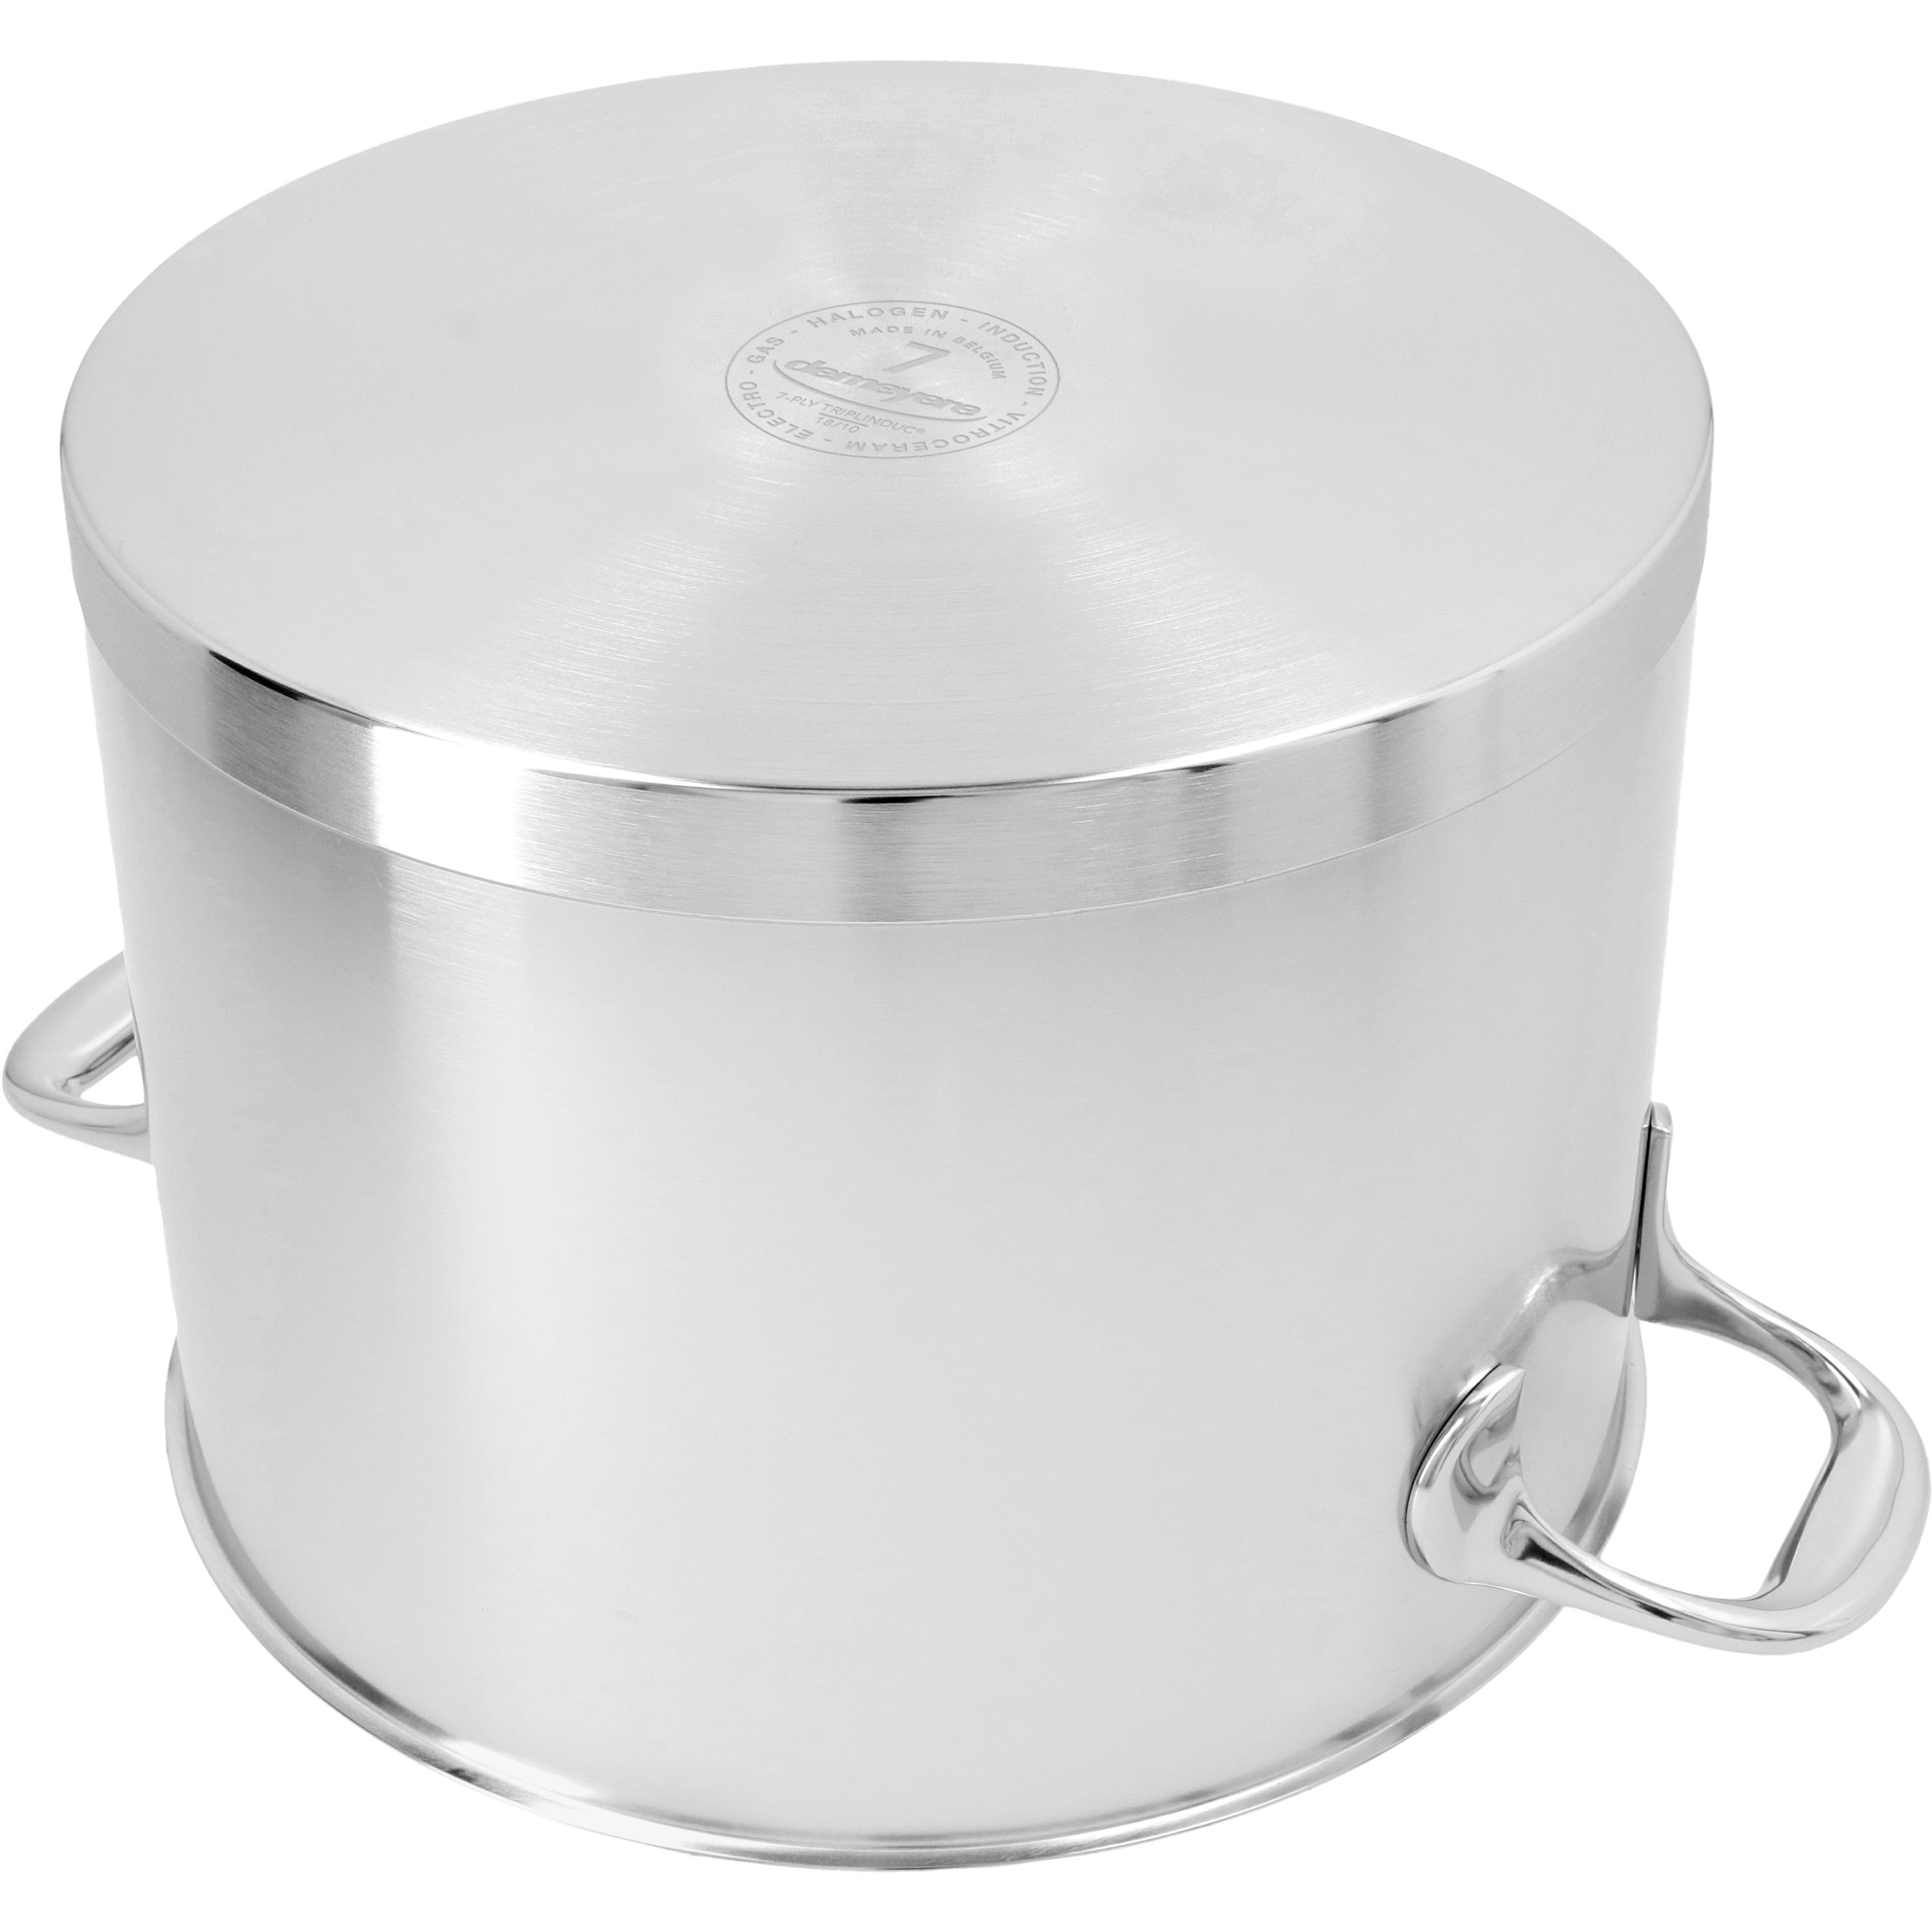 Buy Demeyere Atlantis Stock pot with lid